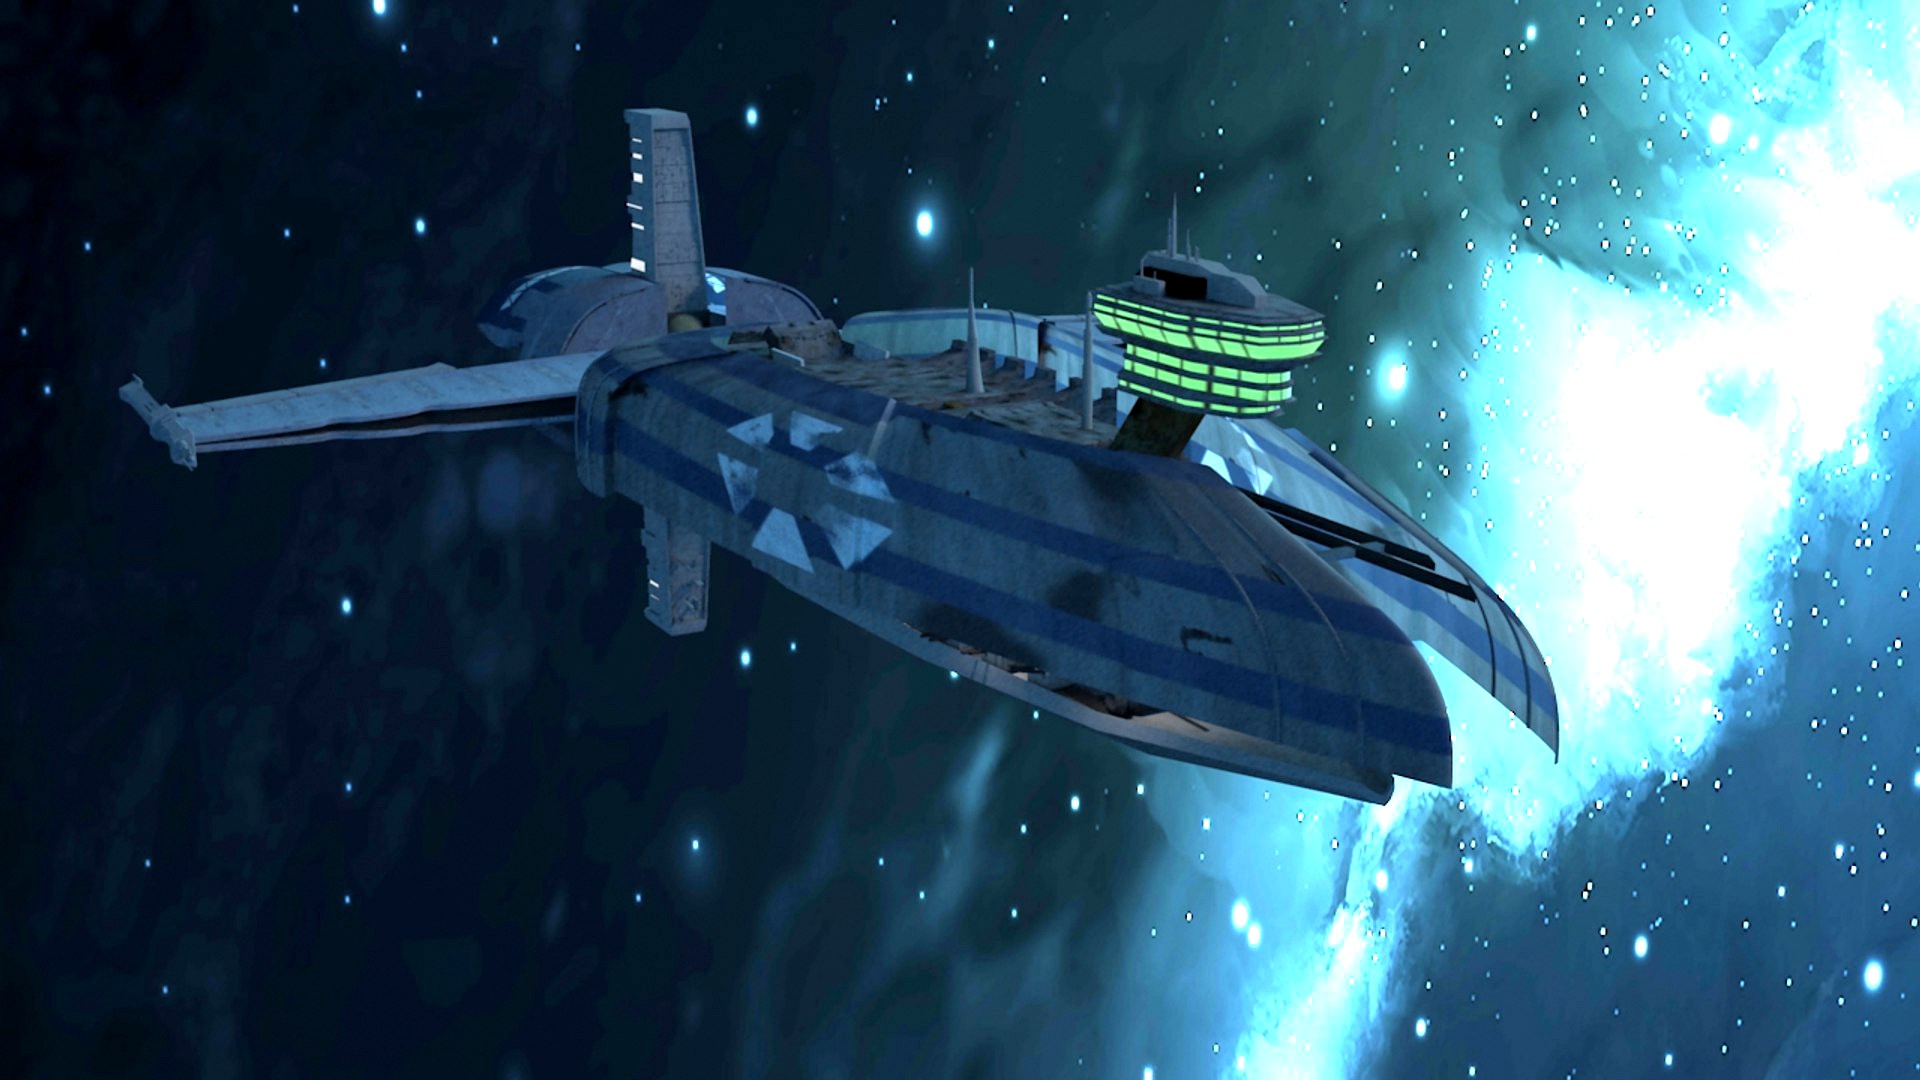 Starwars separation ship